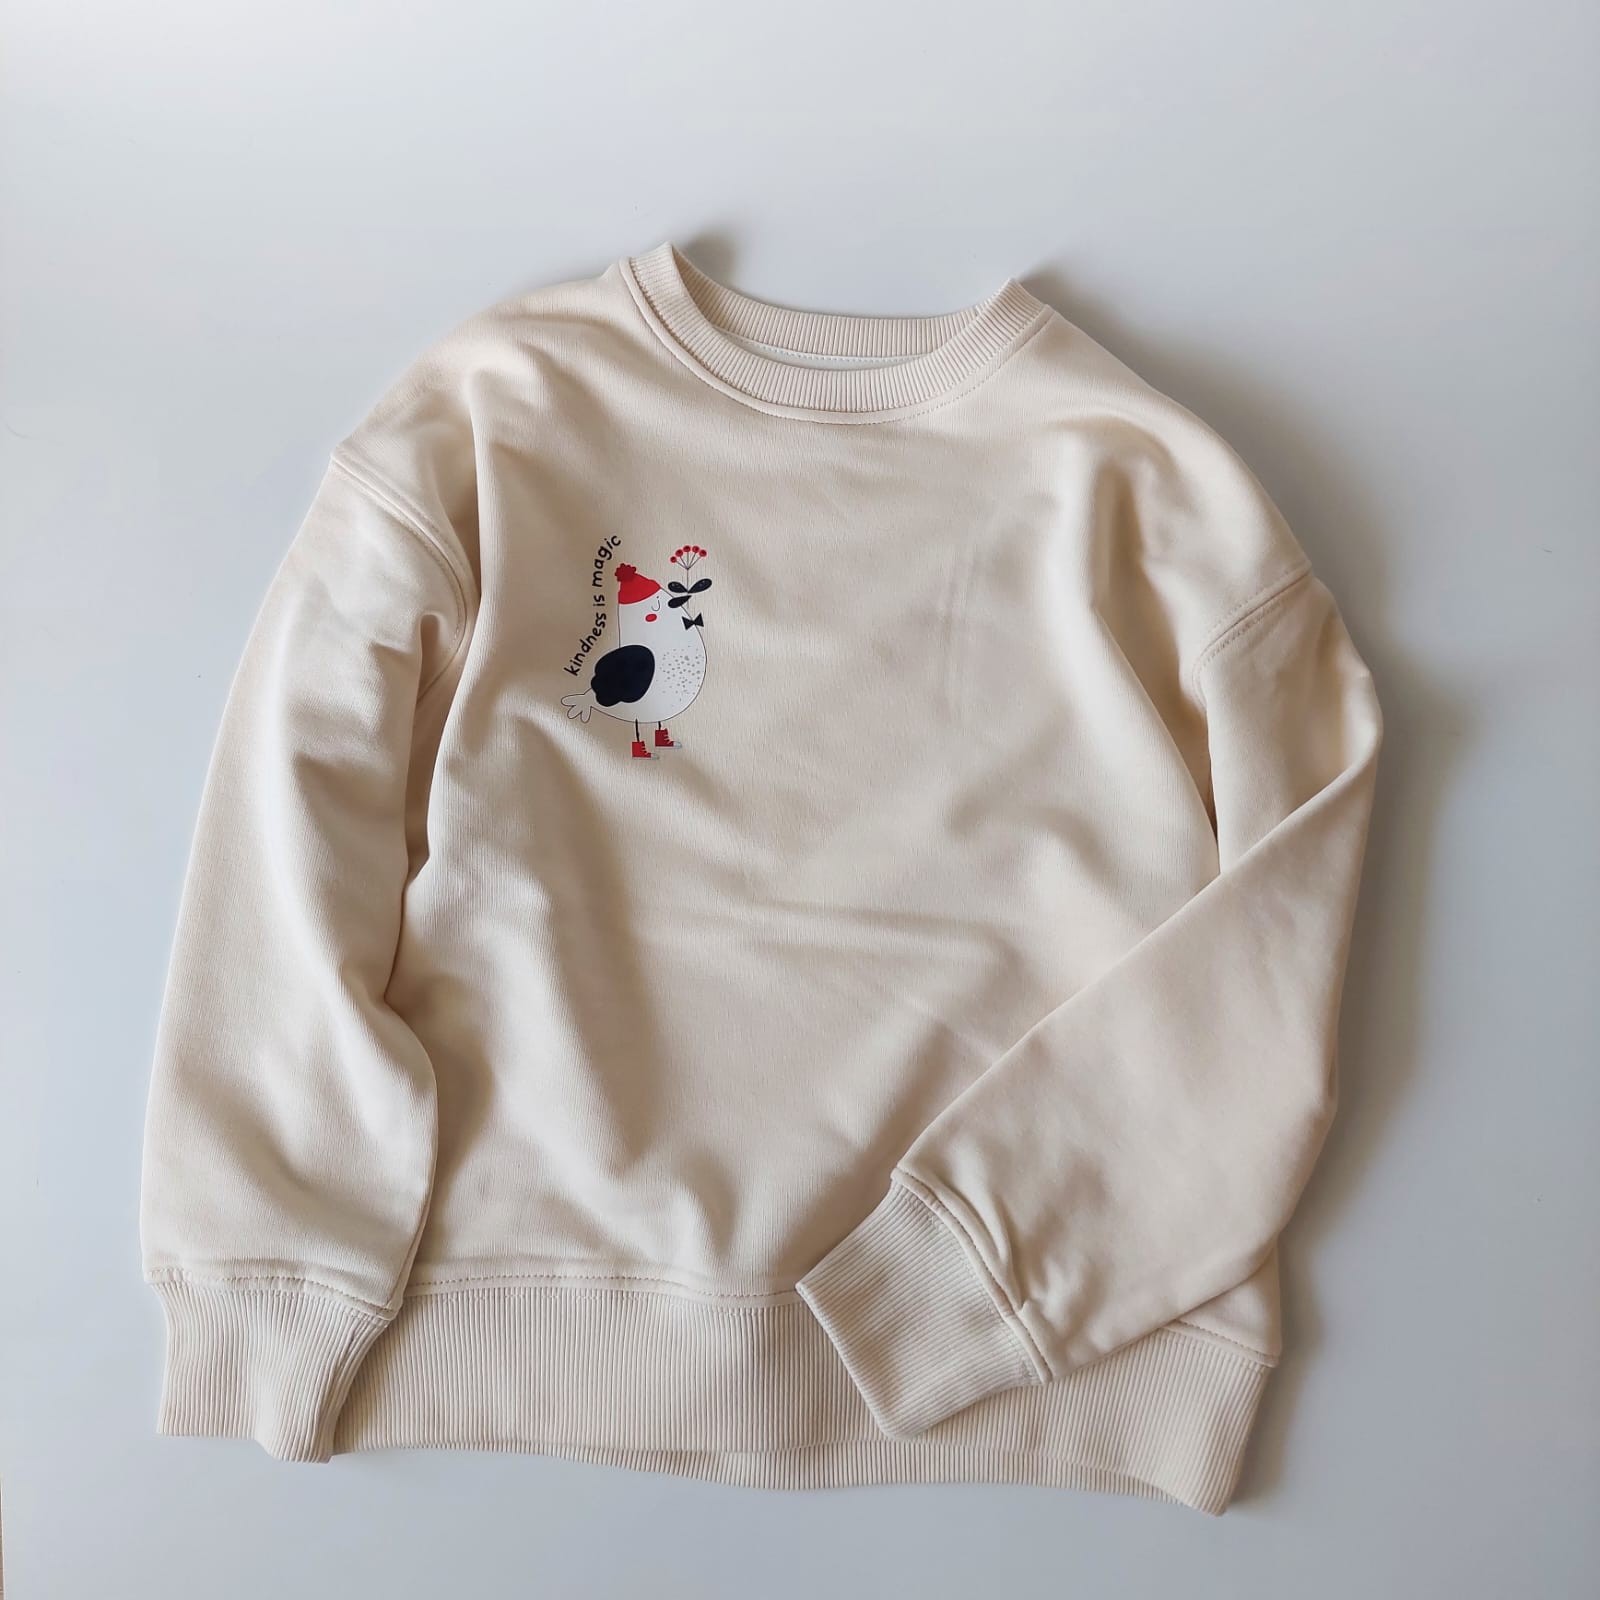 Suumi Cool Kids sweatshirt